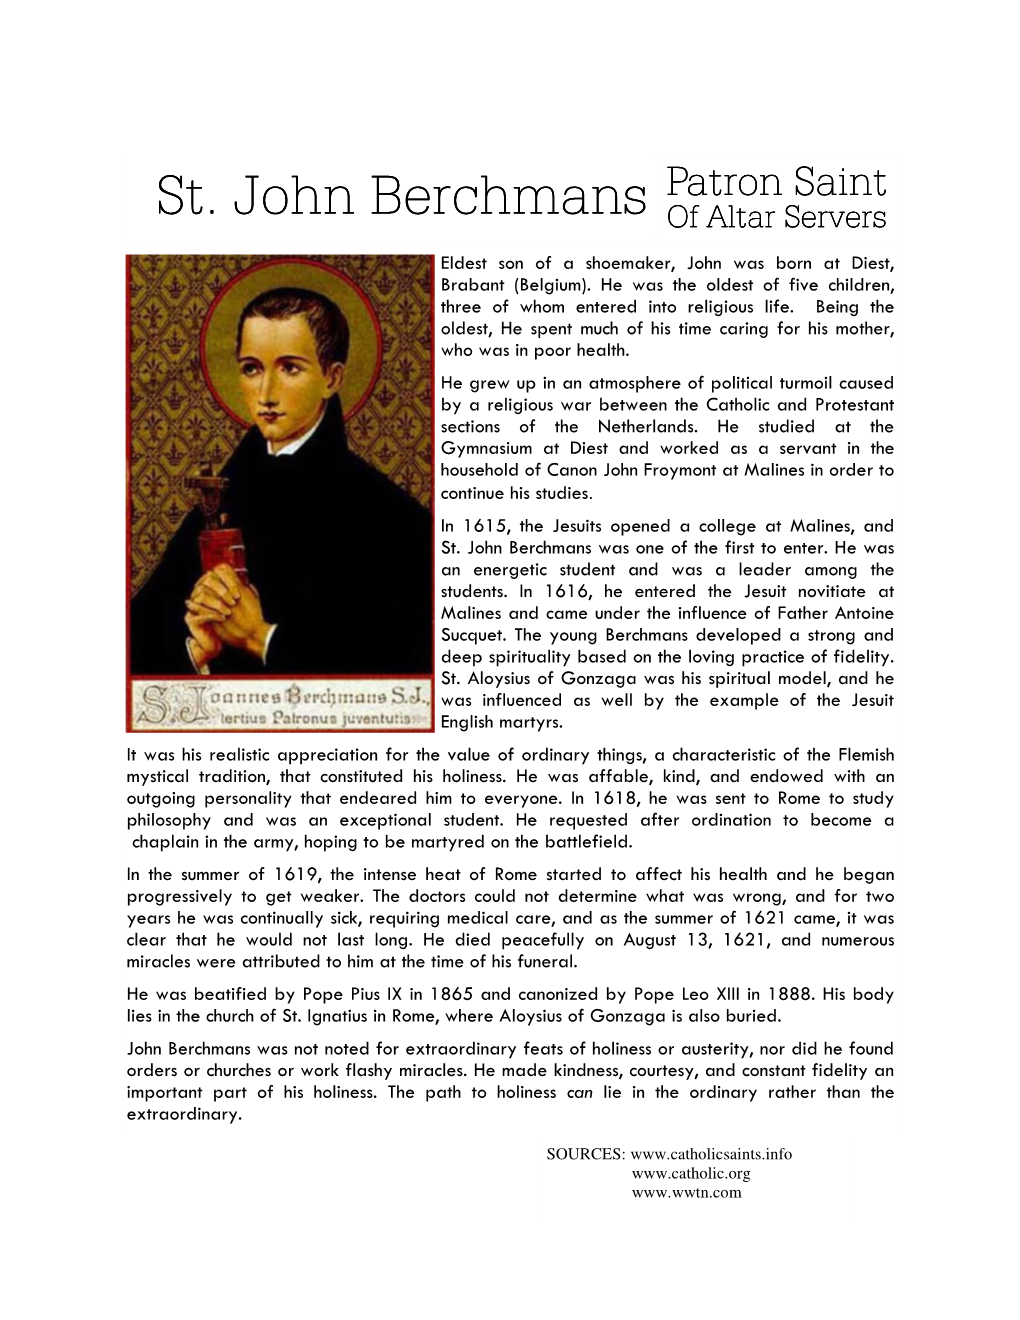 St. John Berchmans St. John Berchmans